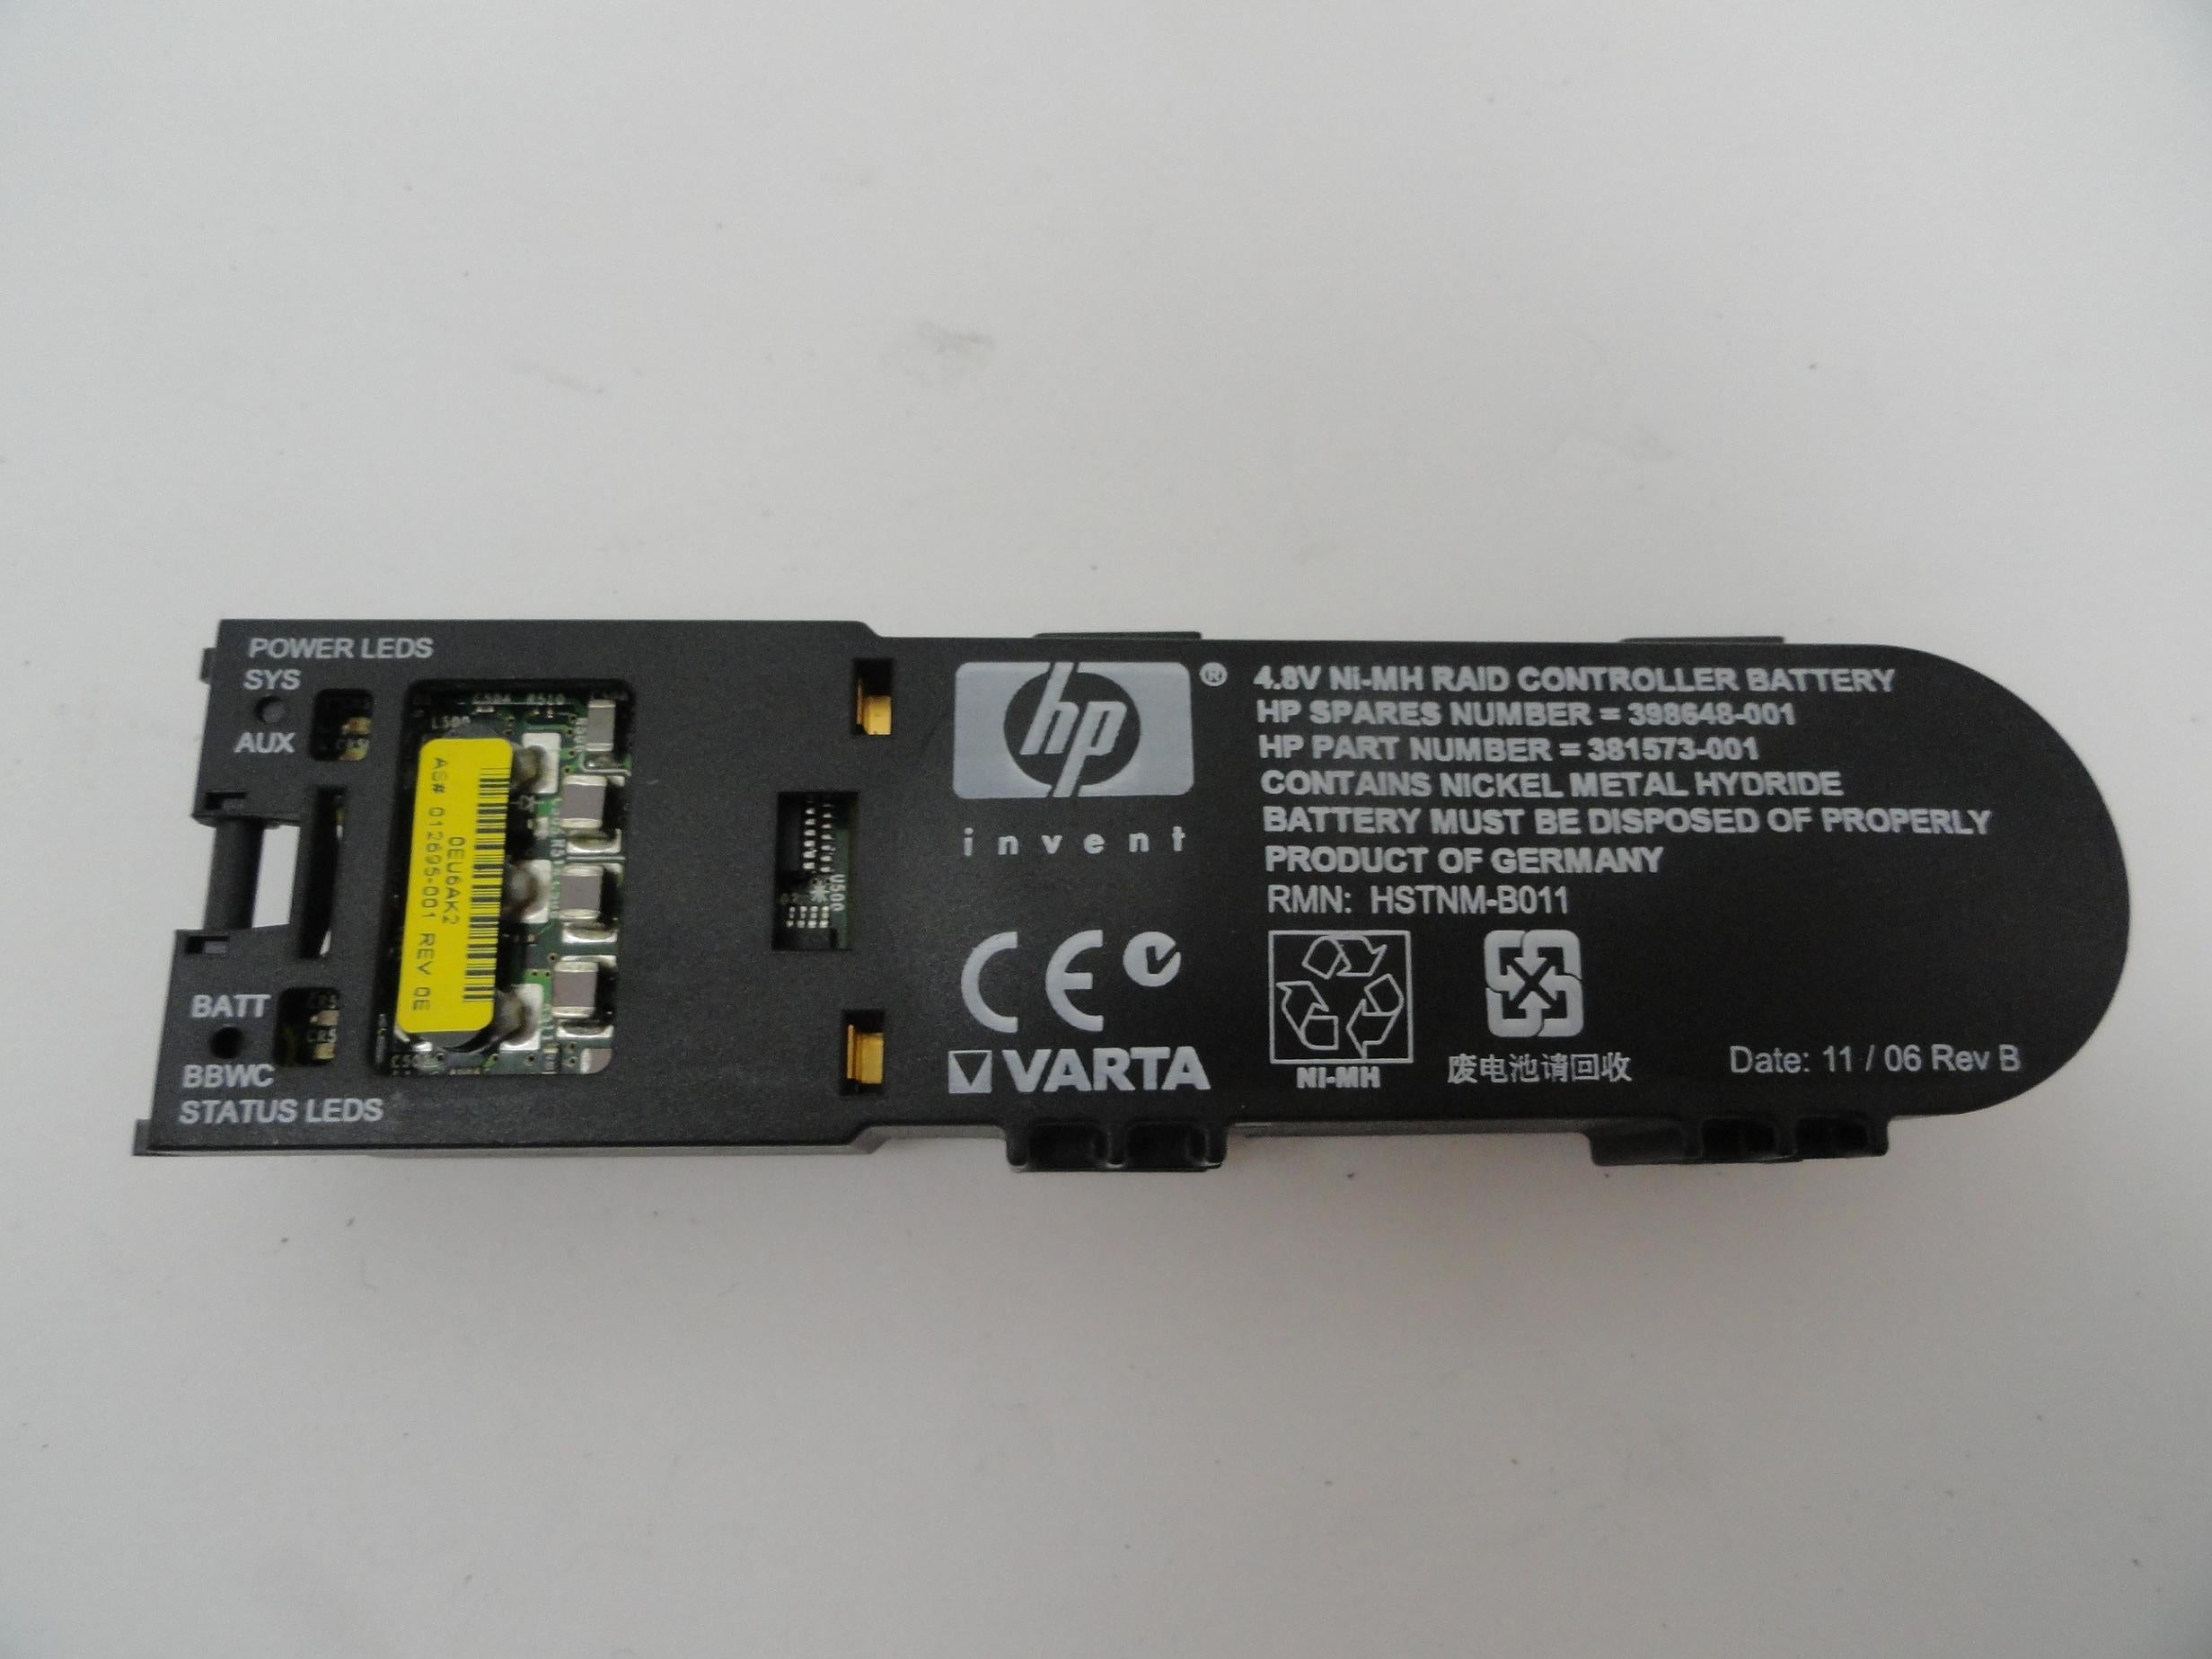 PR12832_381573-001_HP 4.8V Ni-MH Raid Controller Battery - Image3